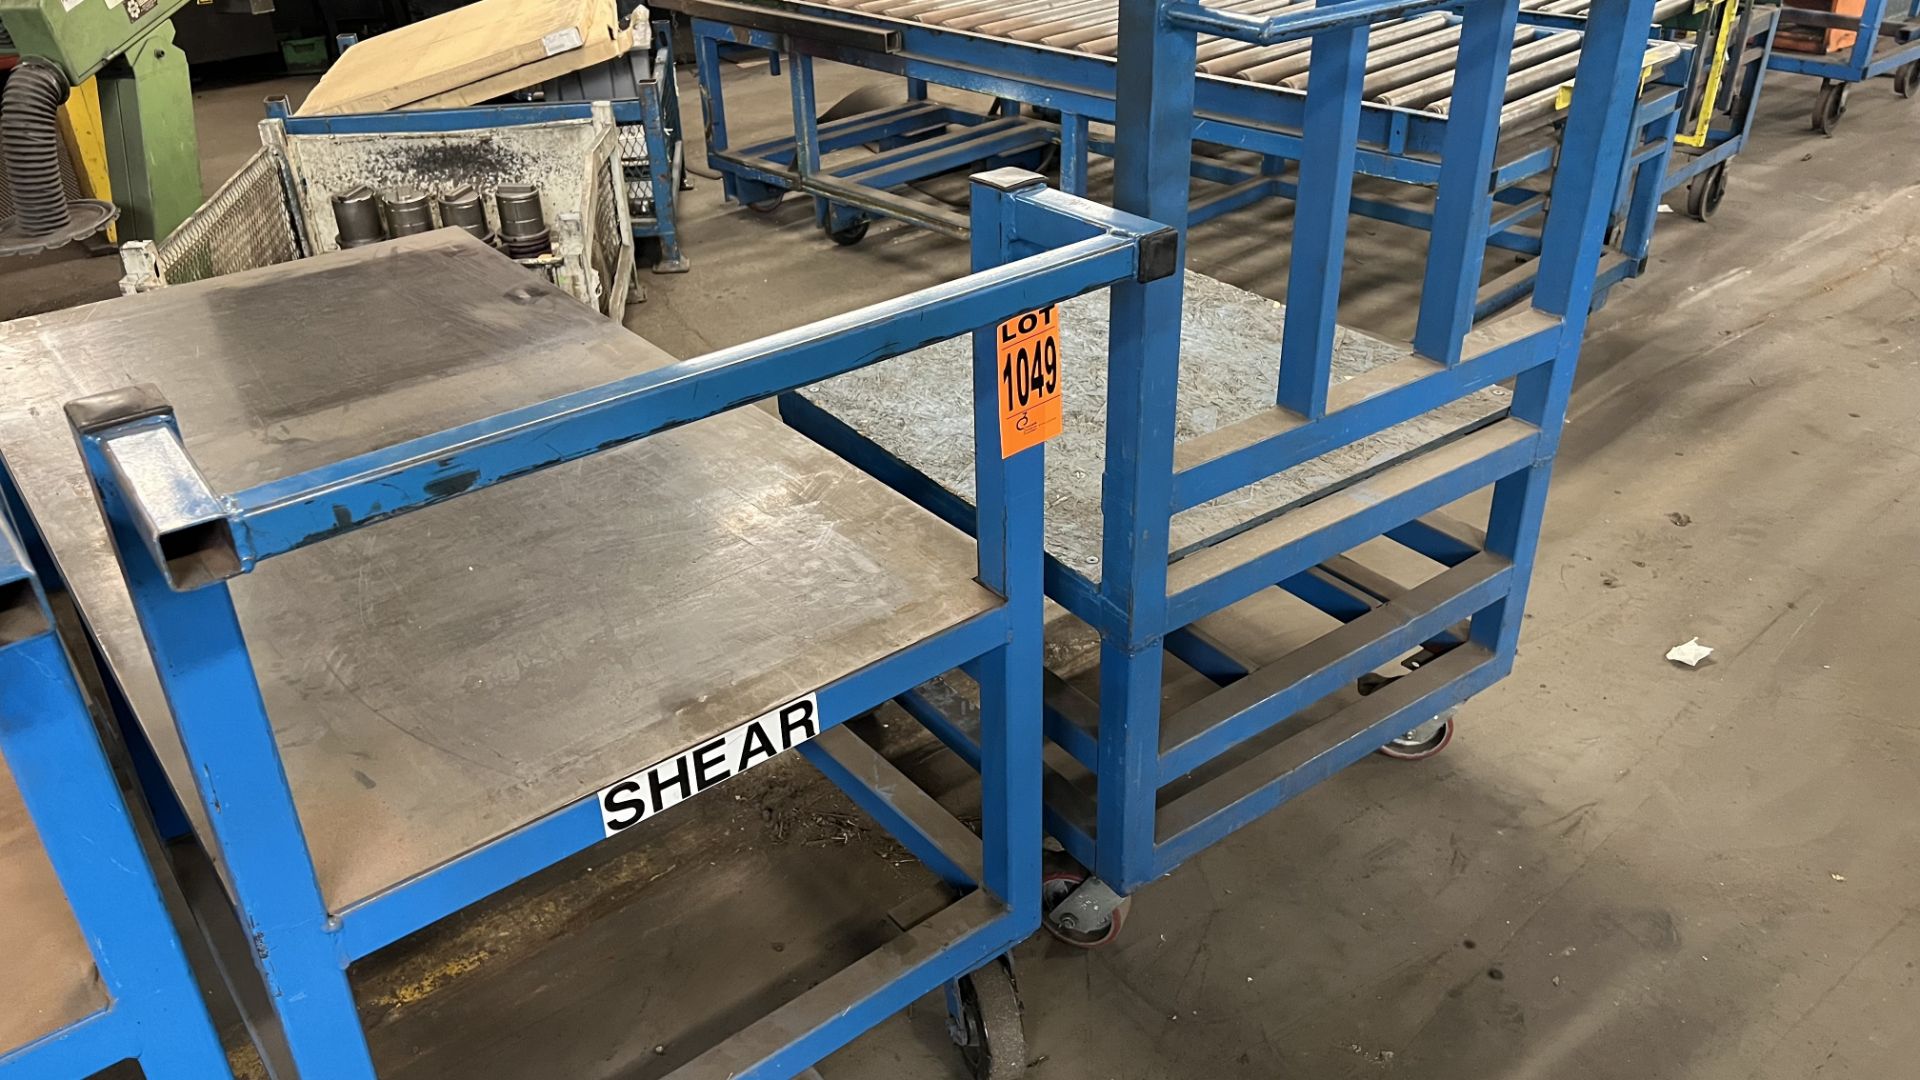 Lot of (2) steel platform carts w/ lockable casters, handles